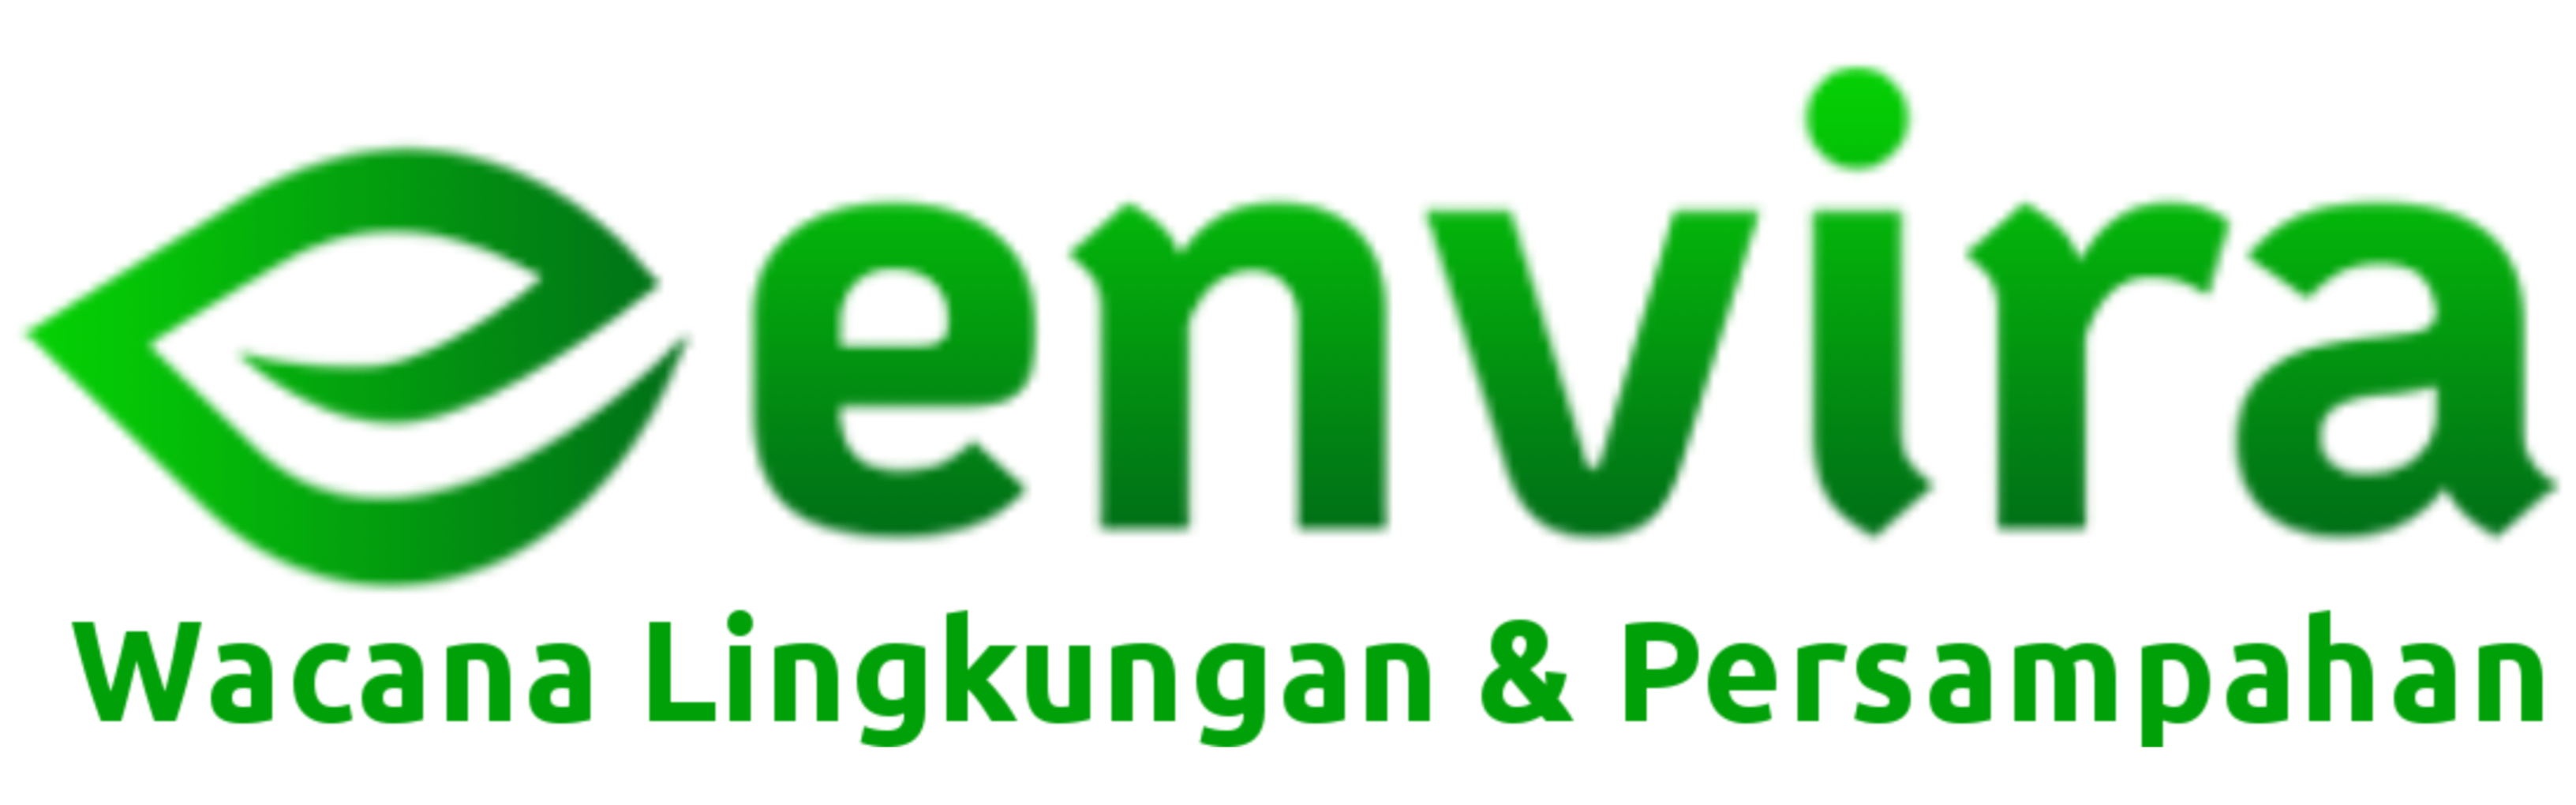 Envira ID | Environmental News | Environmental Services